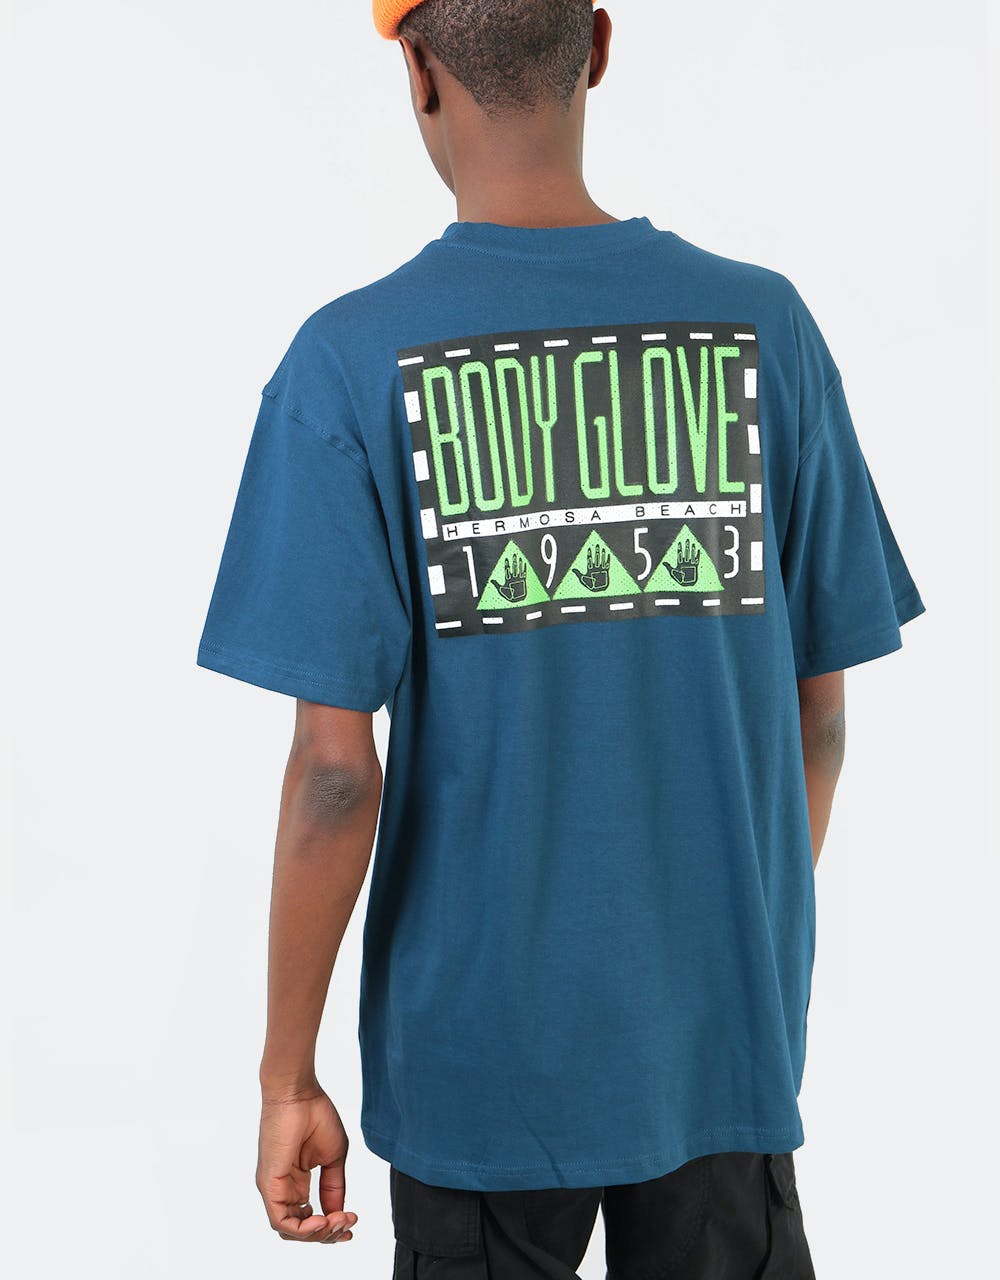 Body Glove Box T-Shirt - Indigo